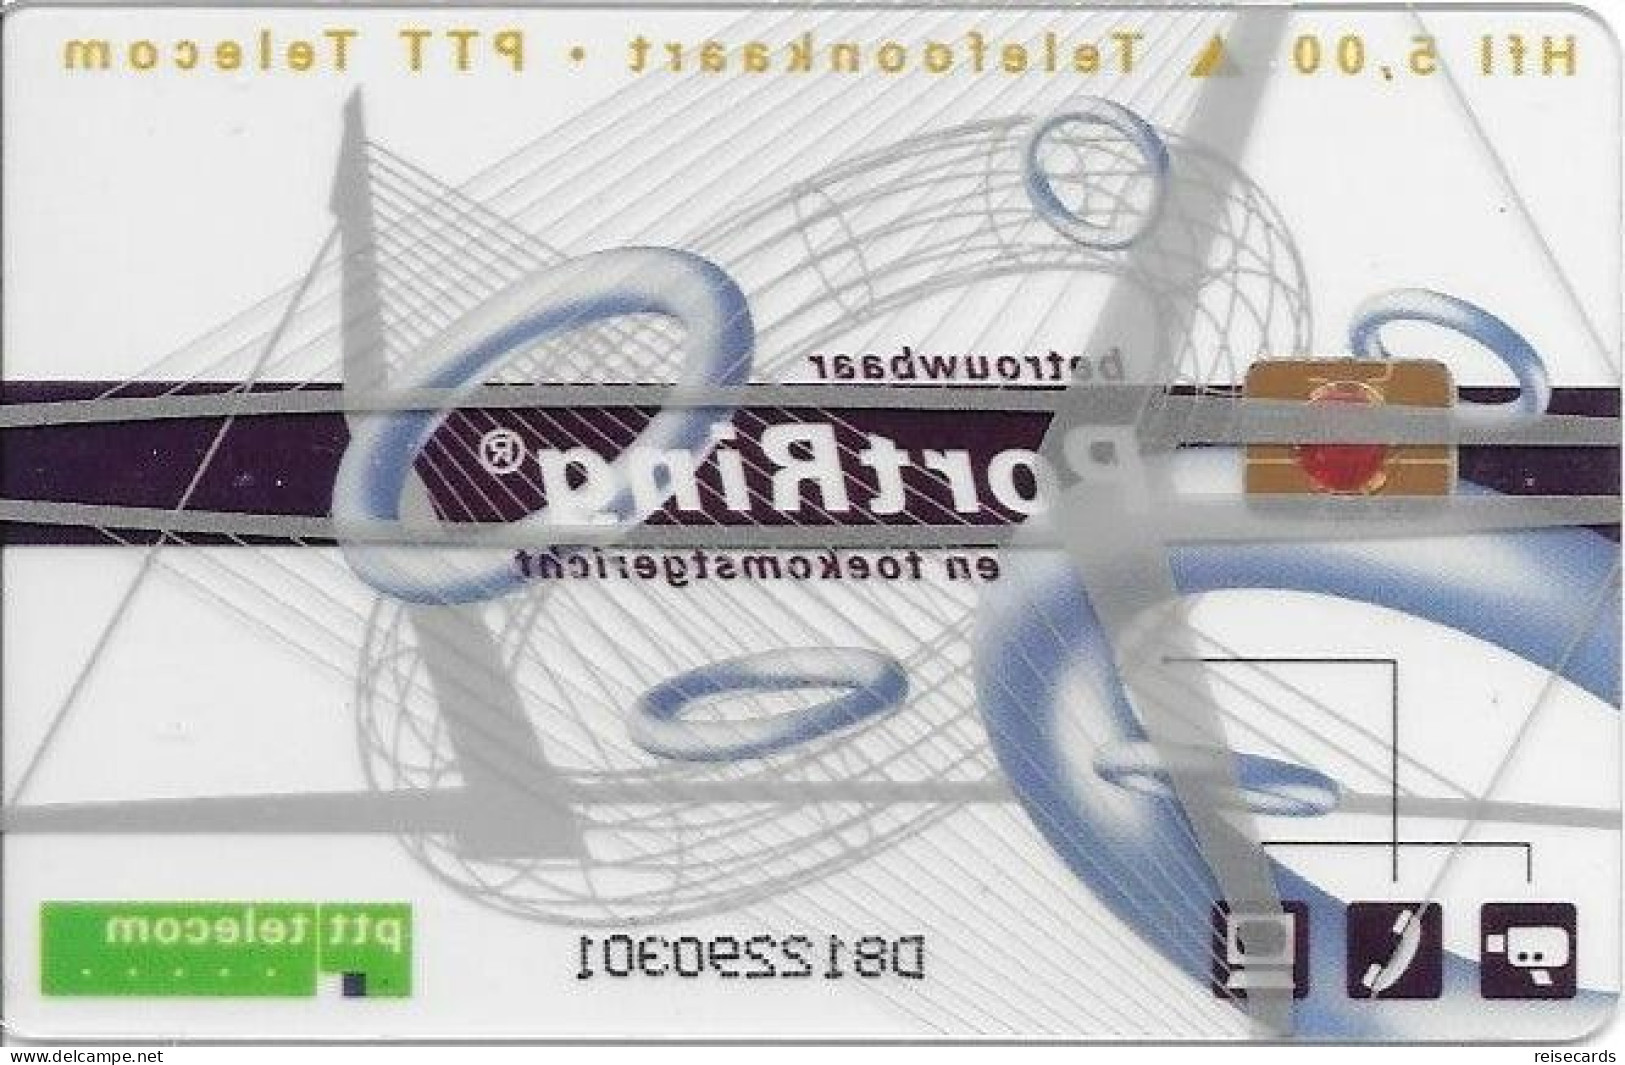 Netherlands: Ptt Telecom - 1997 PortRing. Mint, Transparent - Públicas